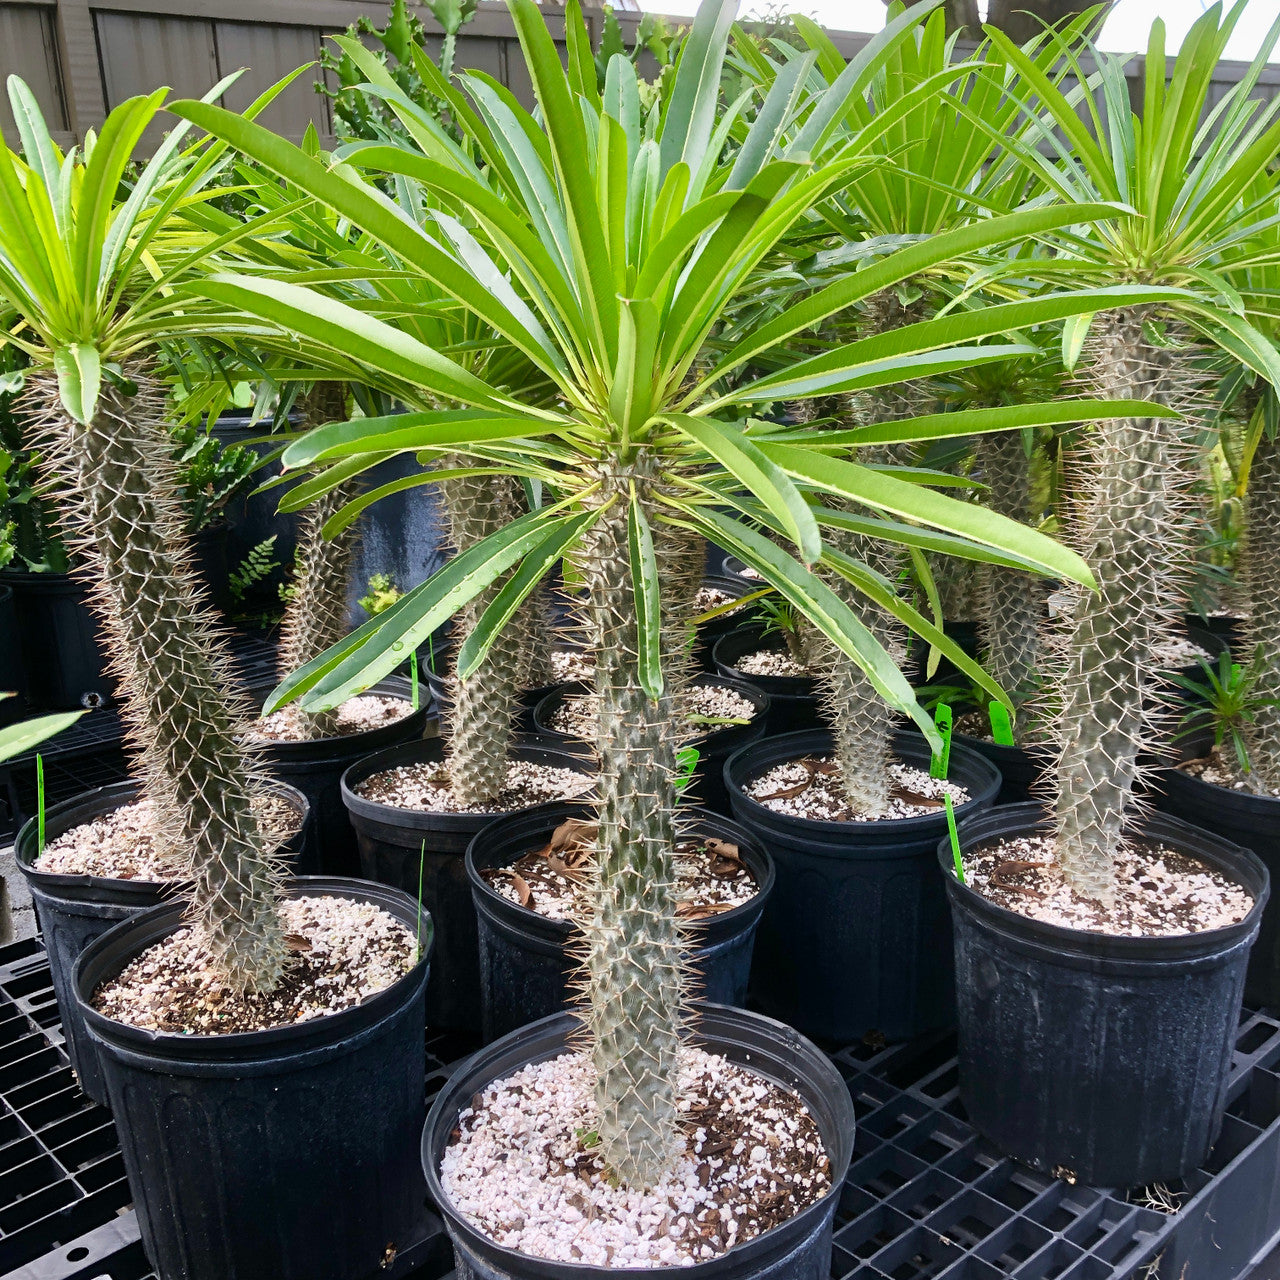 Pachypodium Lamerei (Madagascar Palm)